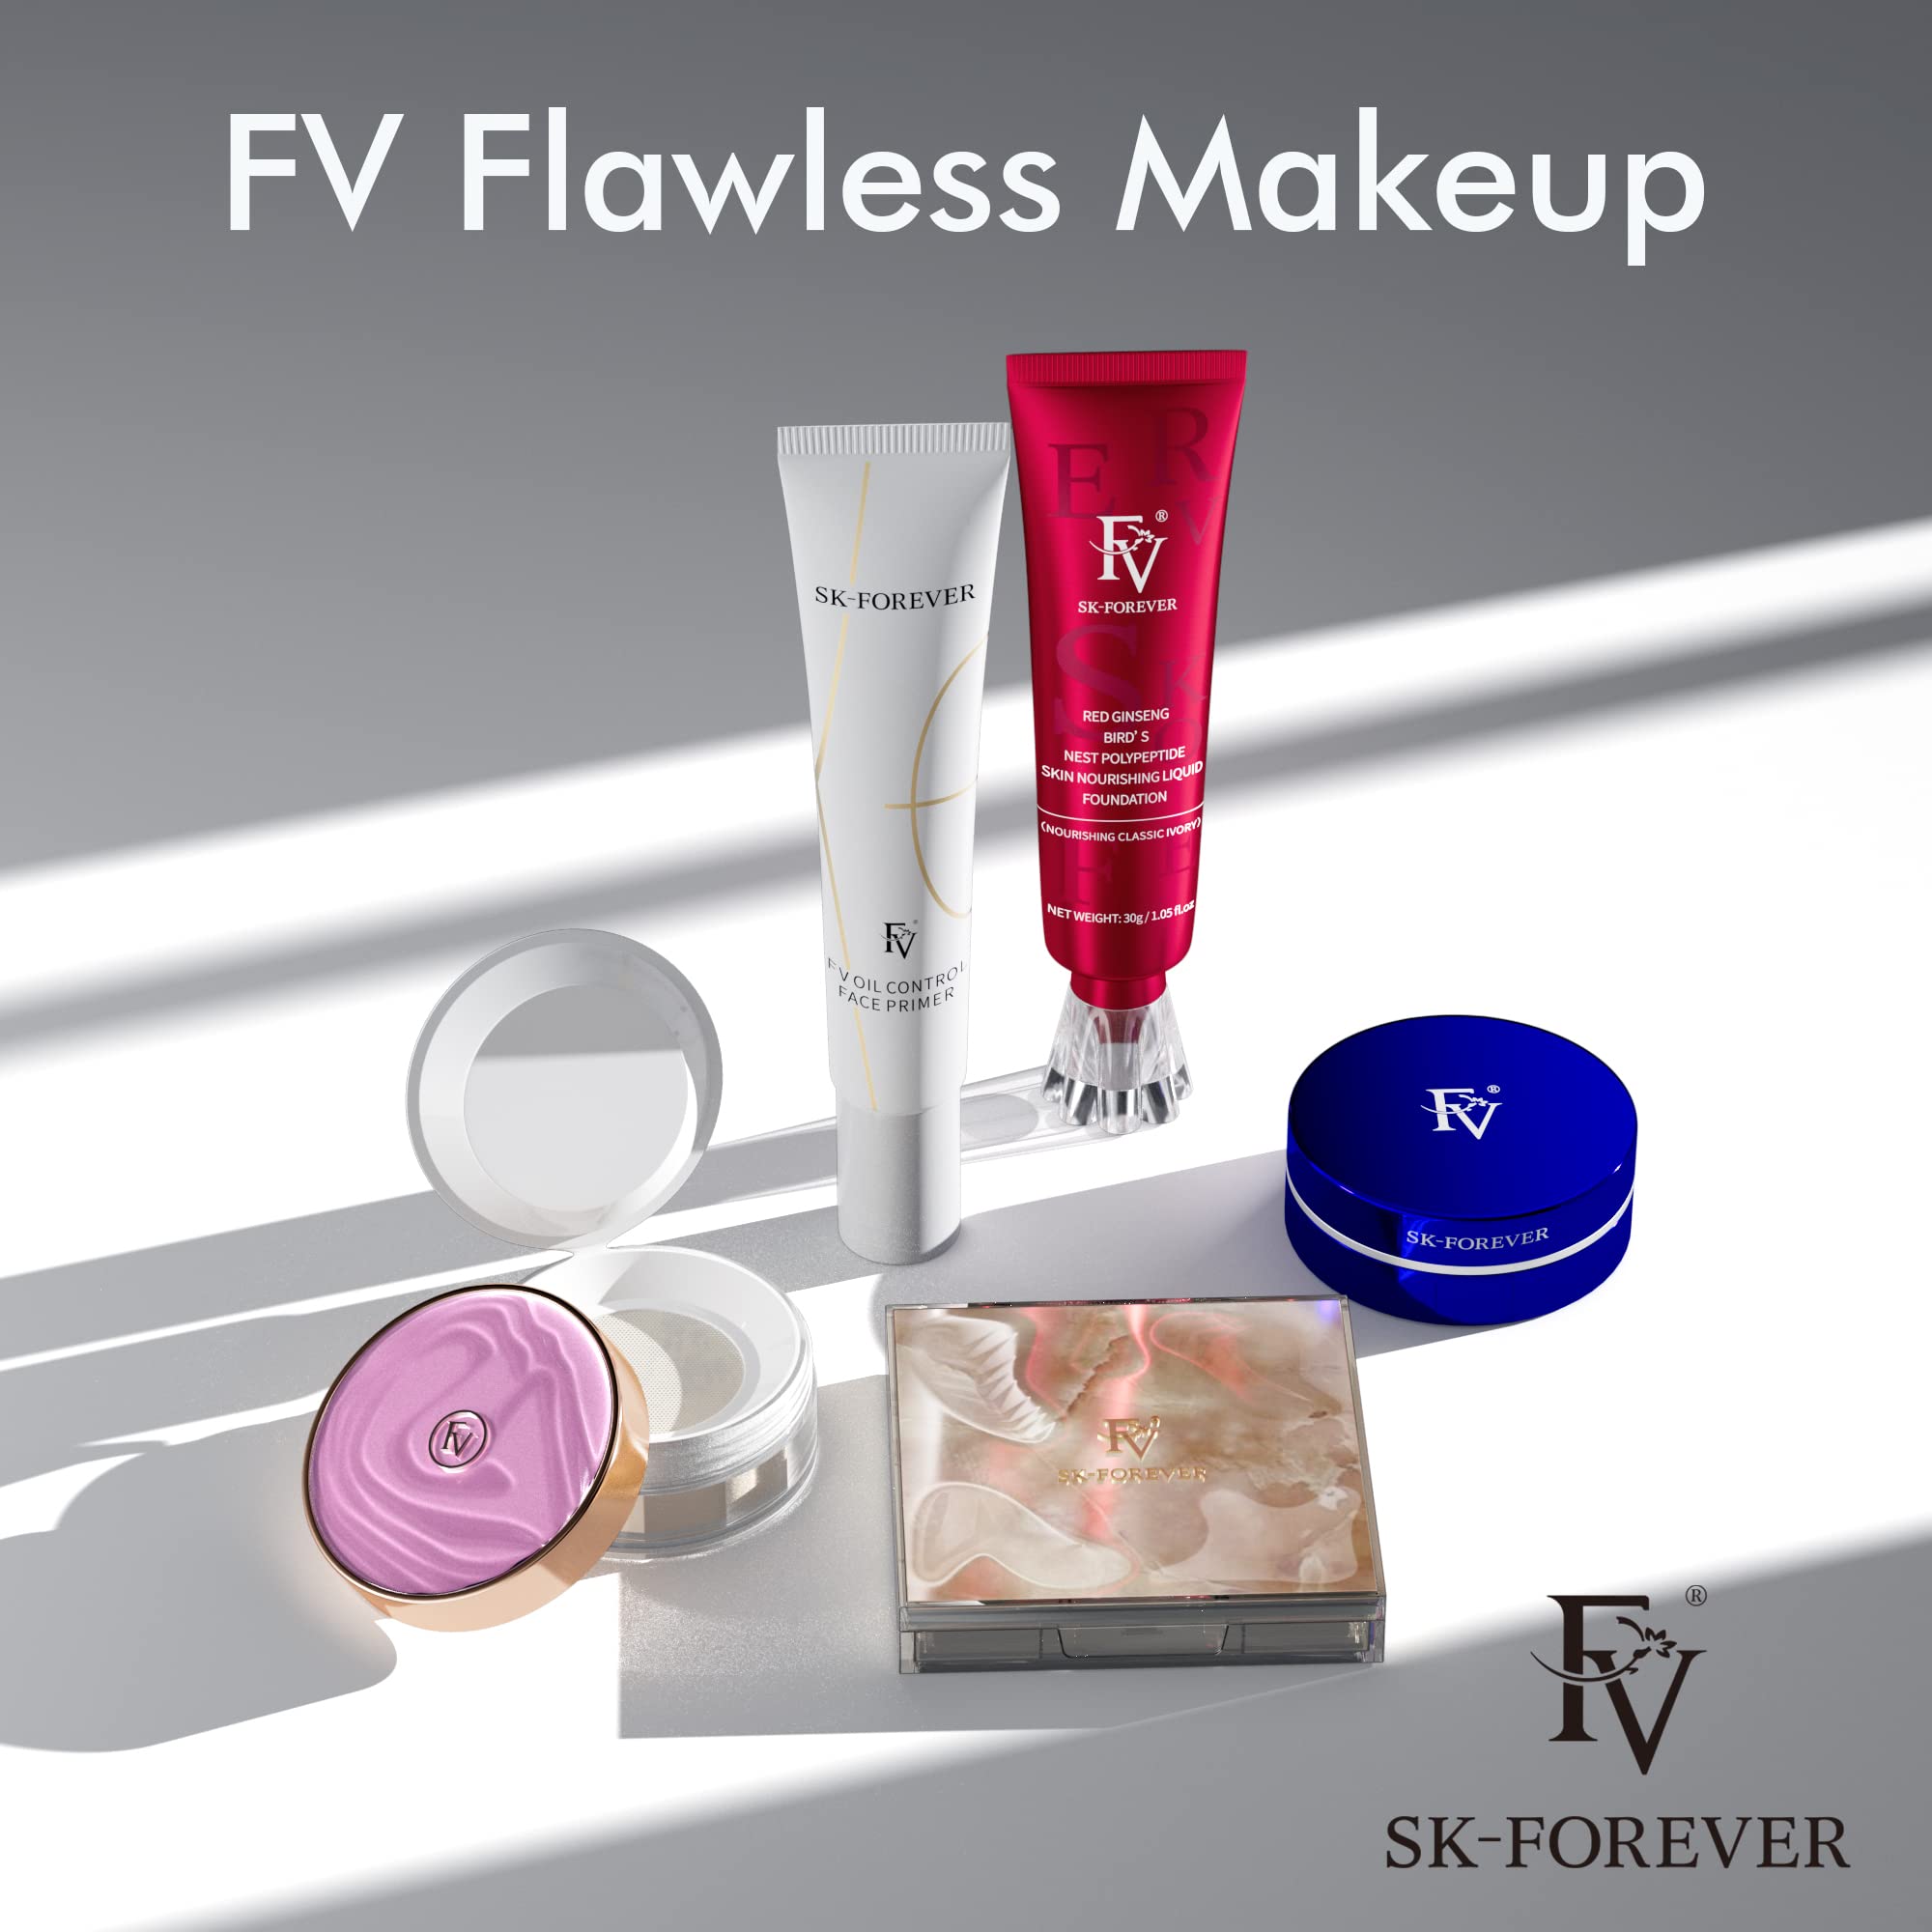 FV Dewy Liquid Foundation Makeup, Oil Control Waterproof Long Lasting Face Makeup for Normal & Dry Skin, Lightweight Medium Coverage, Vegan & Crulty-Free, Ivory, 30ml